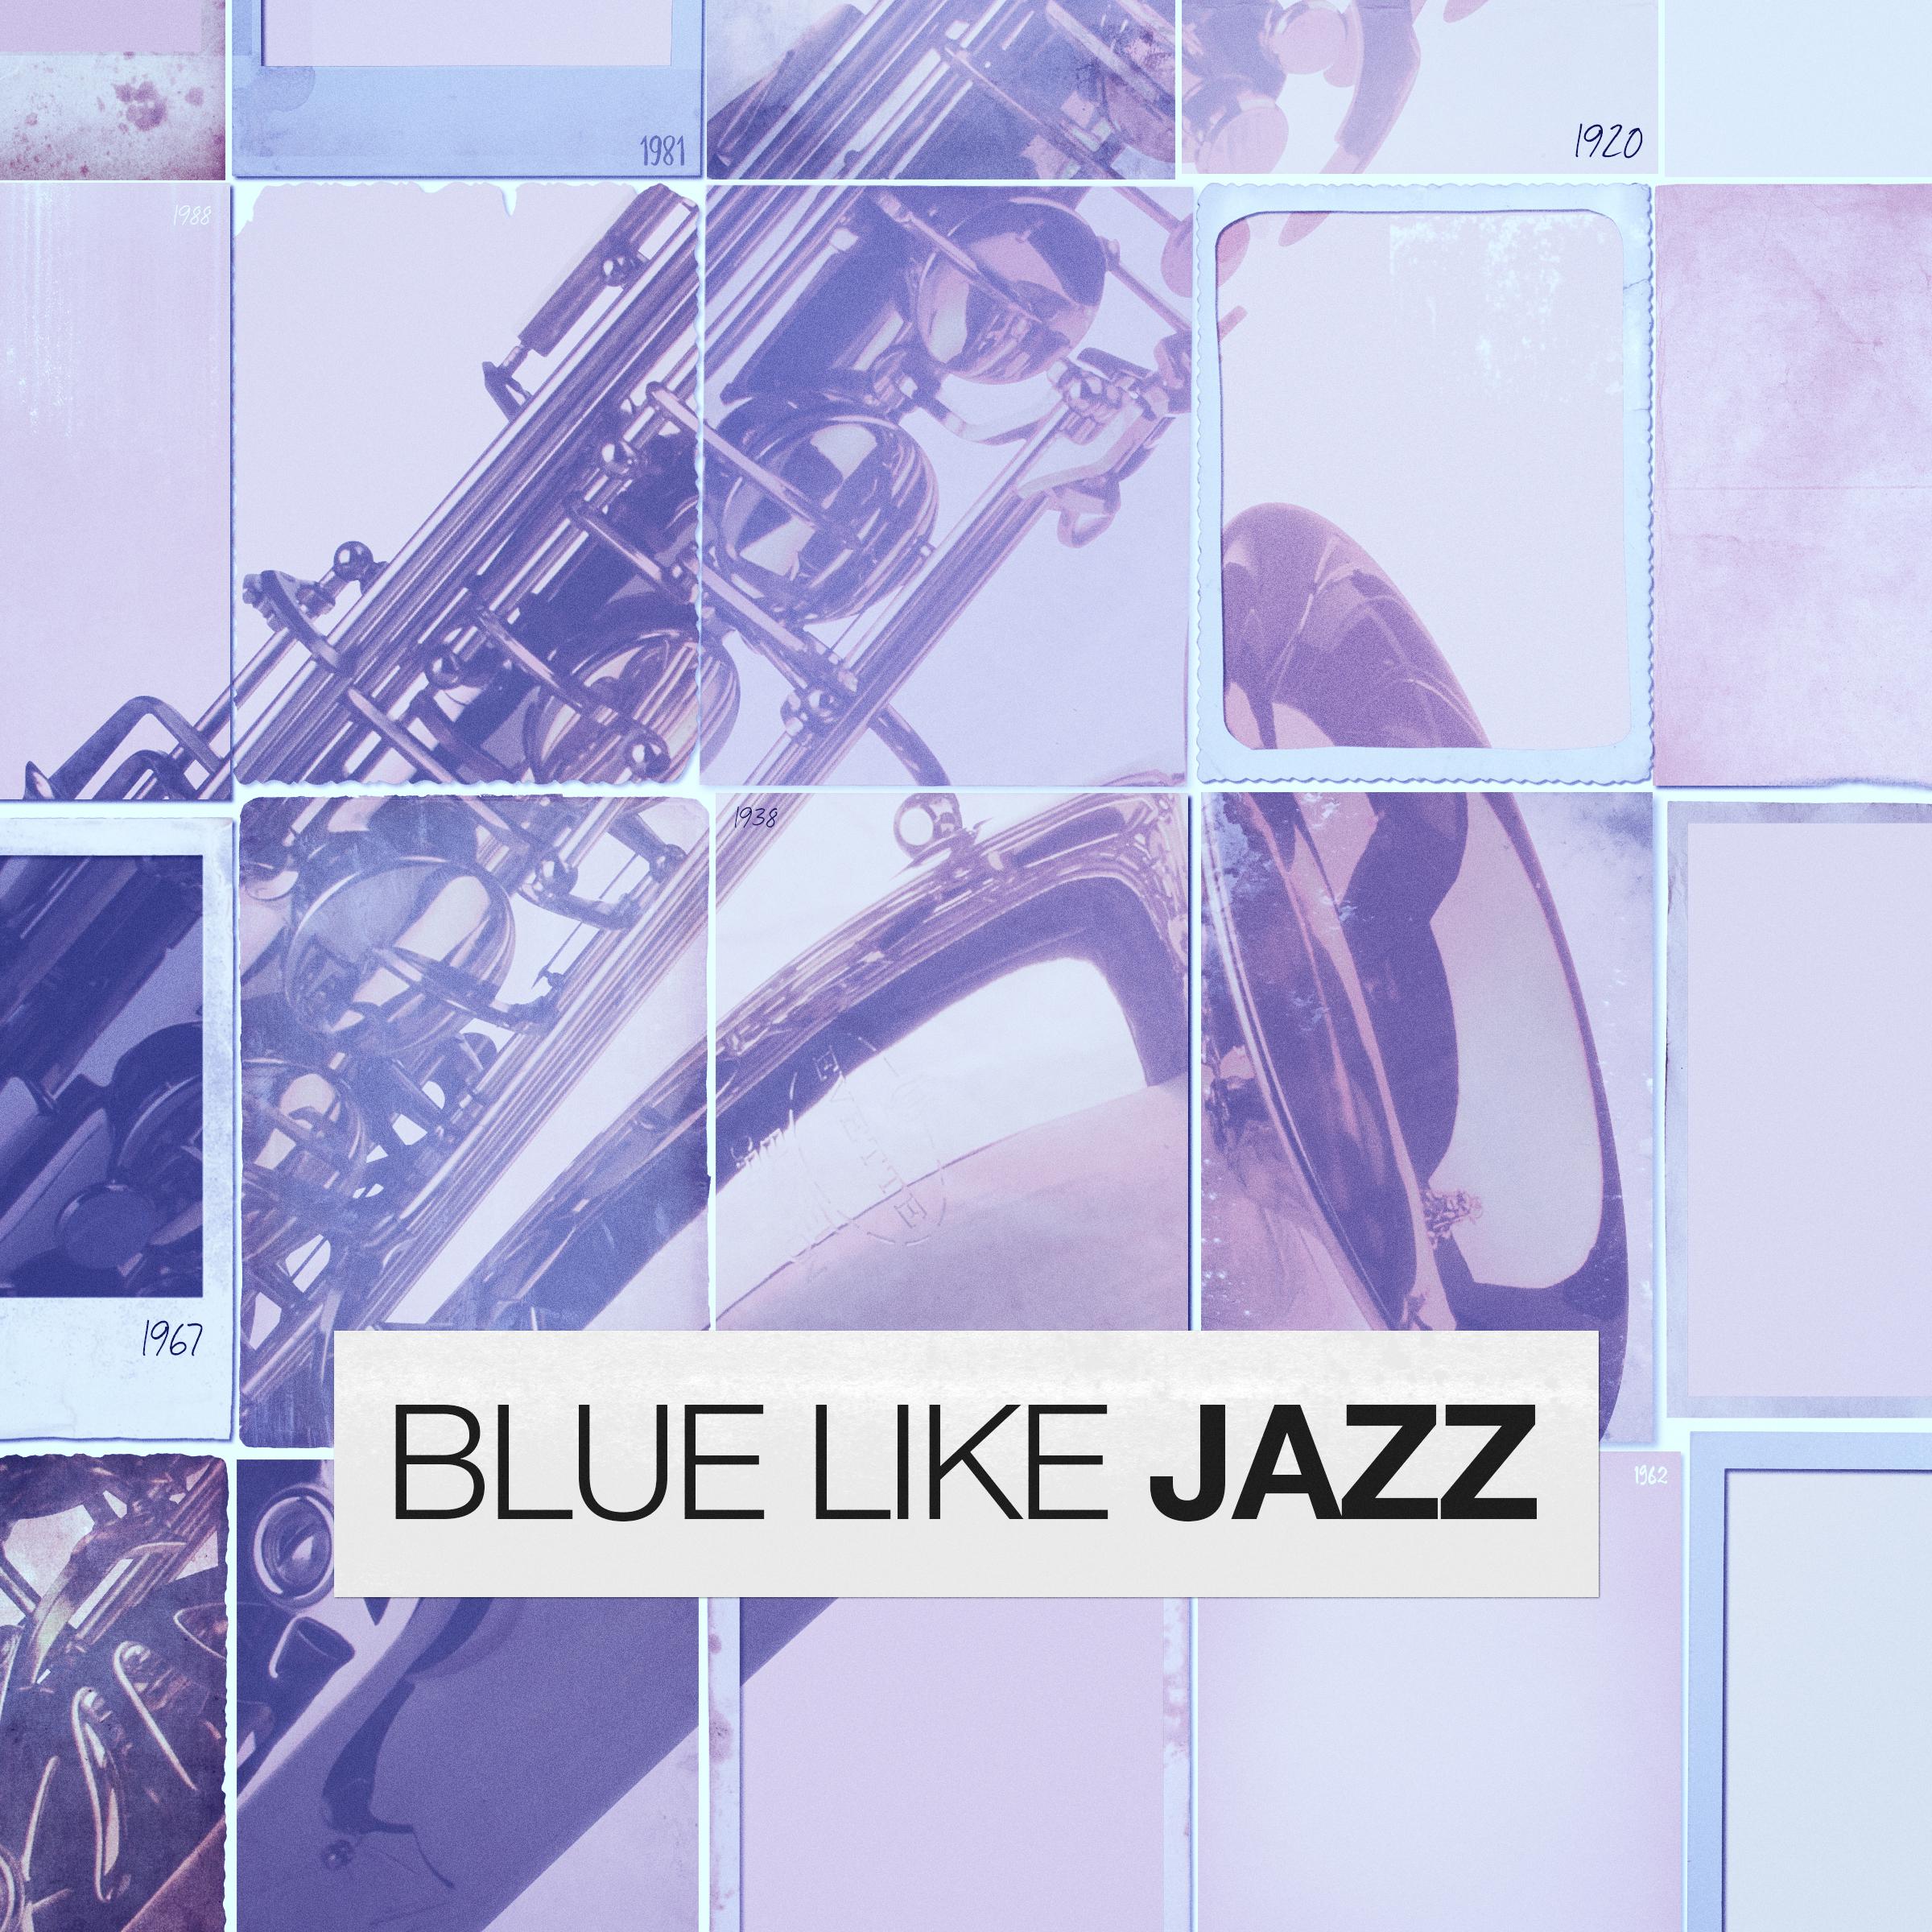 Blue like Jazz